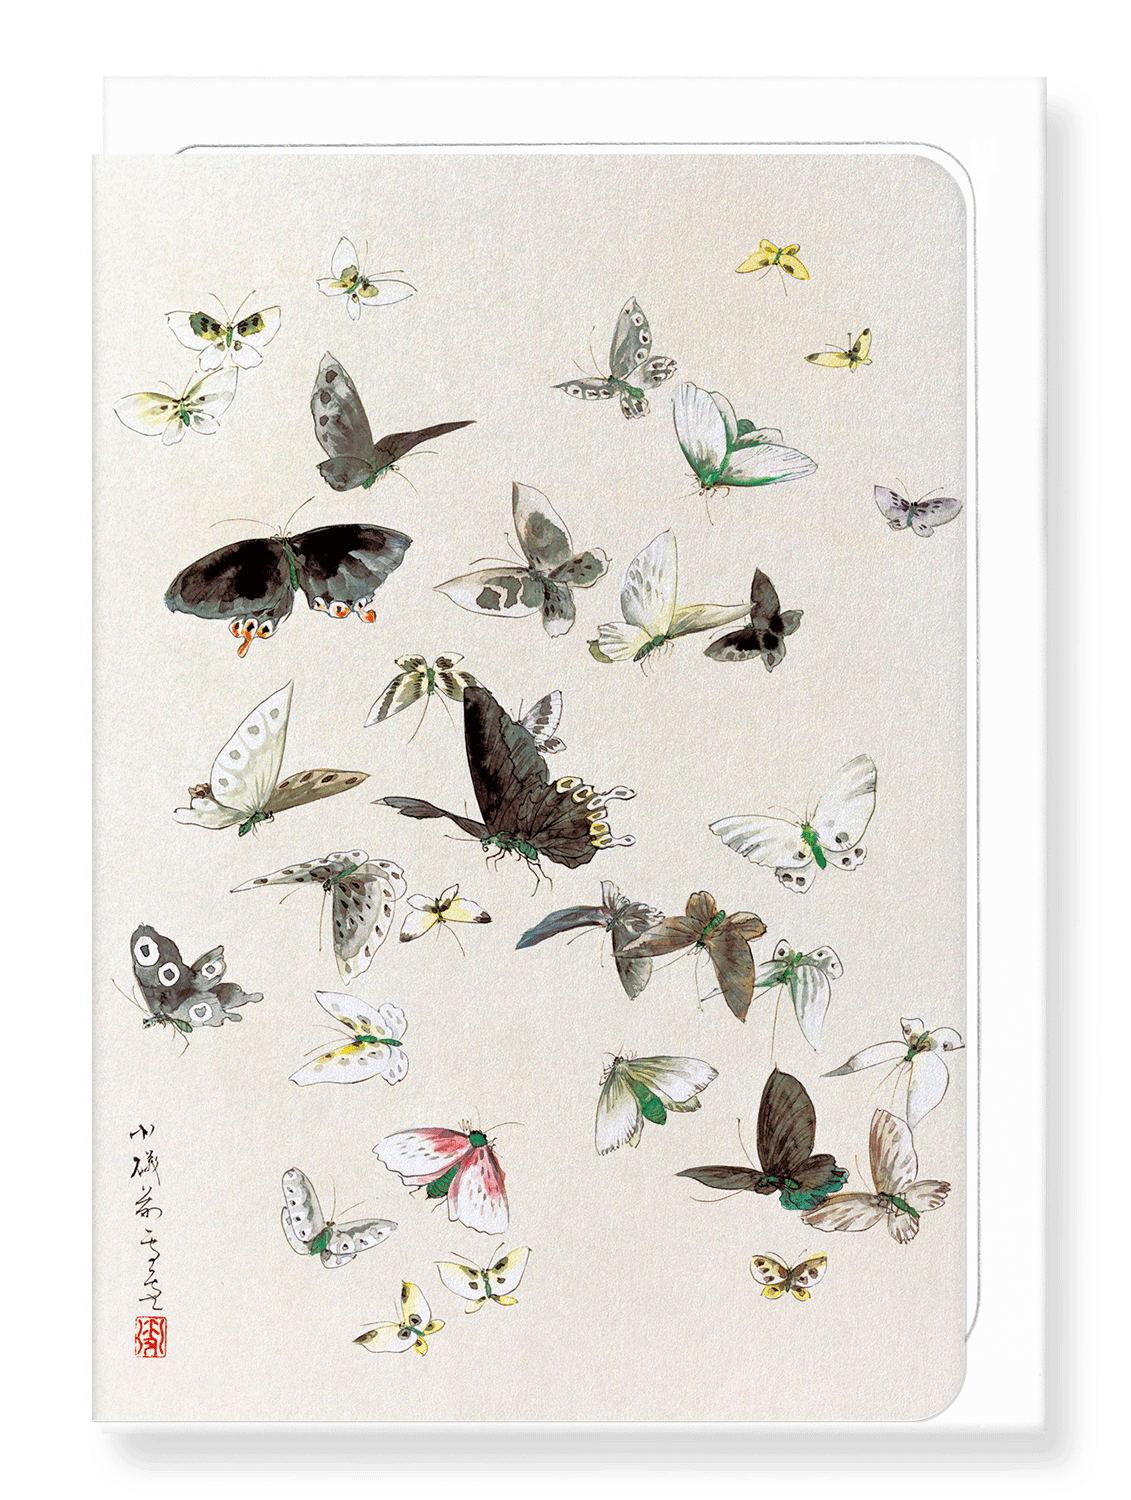 Ezen Designs - Butterlflies and Moths (1830-1850) - Greeting Card - Front